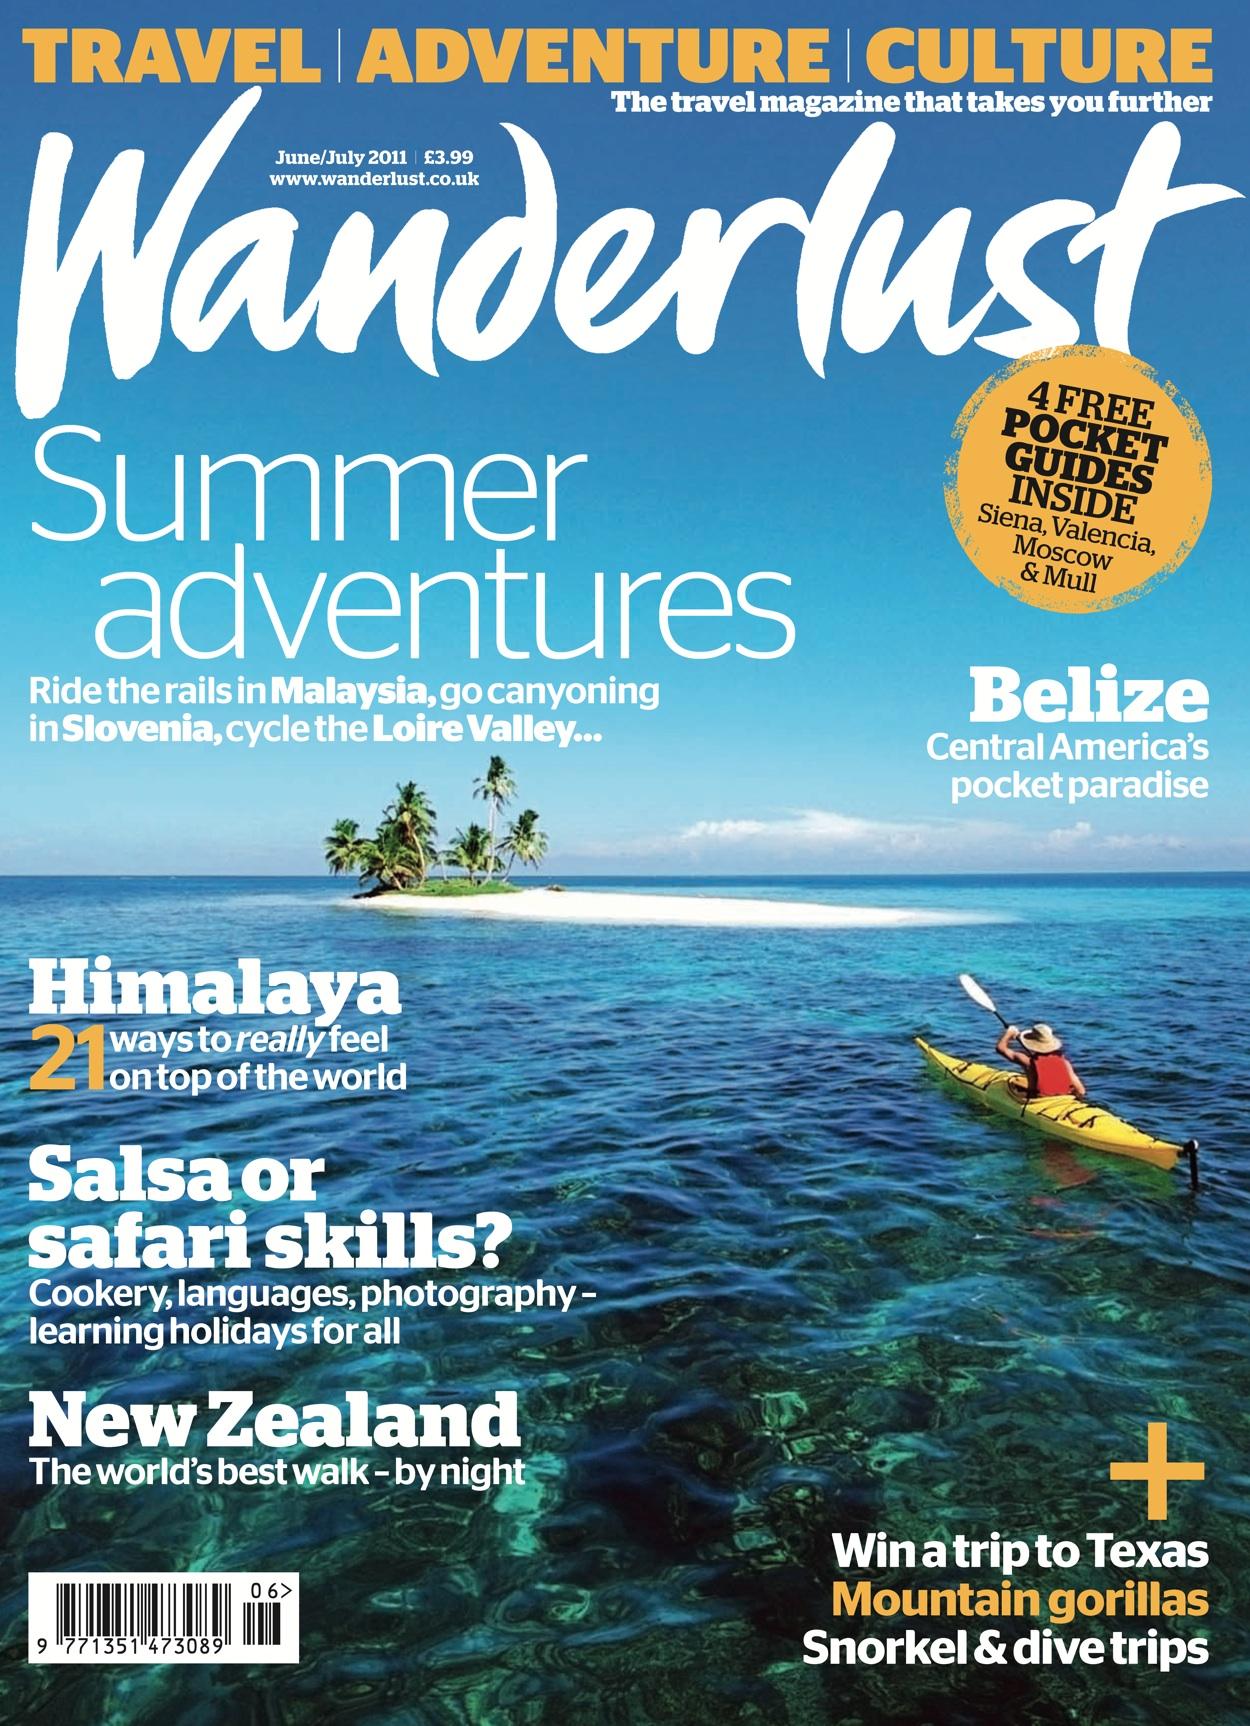 Travel magazines. Wanderlust журнал. Журнал о путешествиях. Wanderlust Travel Magazine. “Wanderlust Travel Magazine” дщпщ.